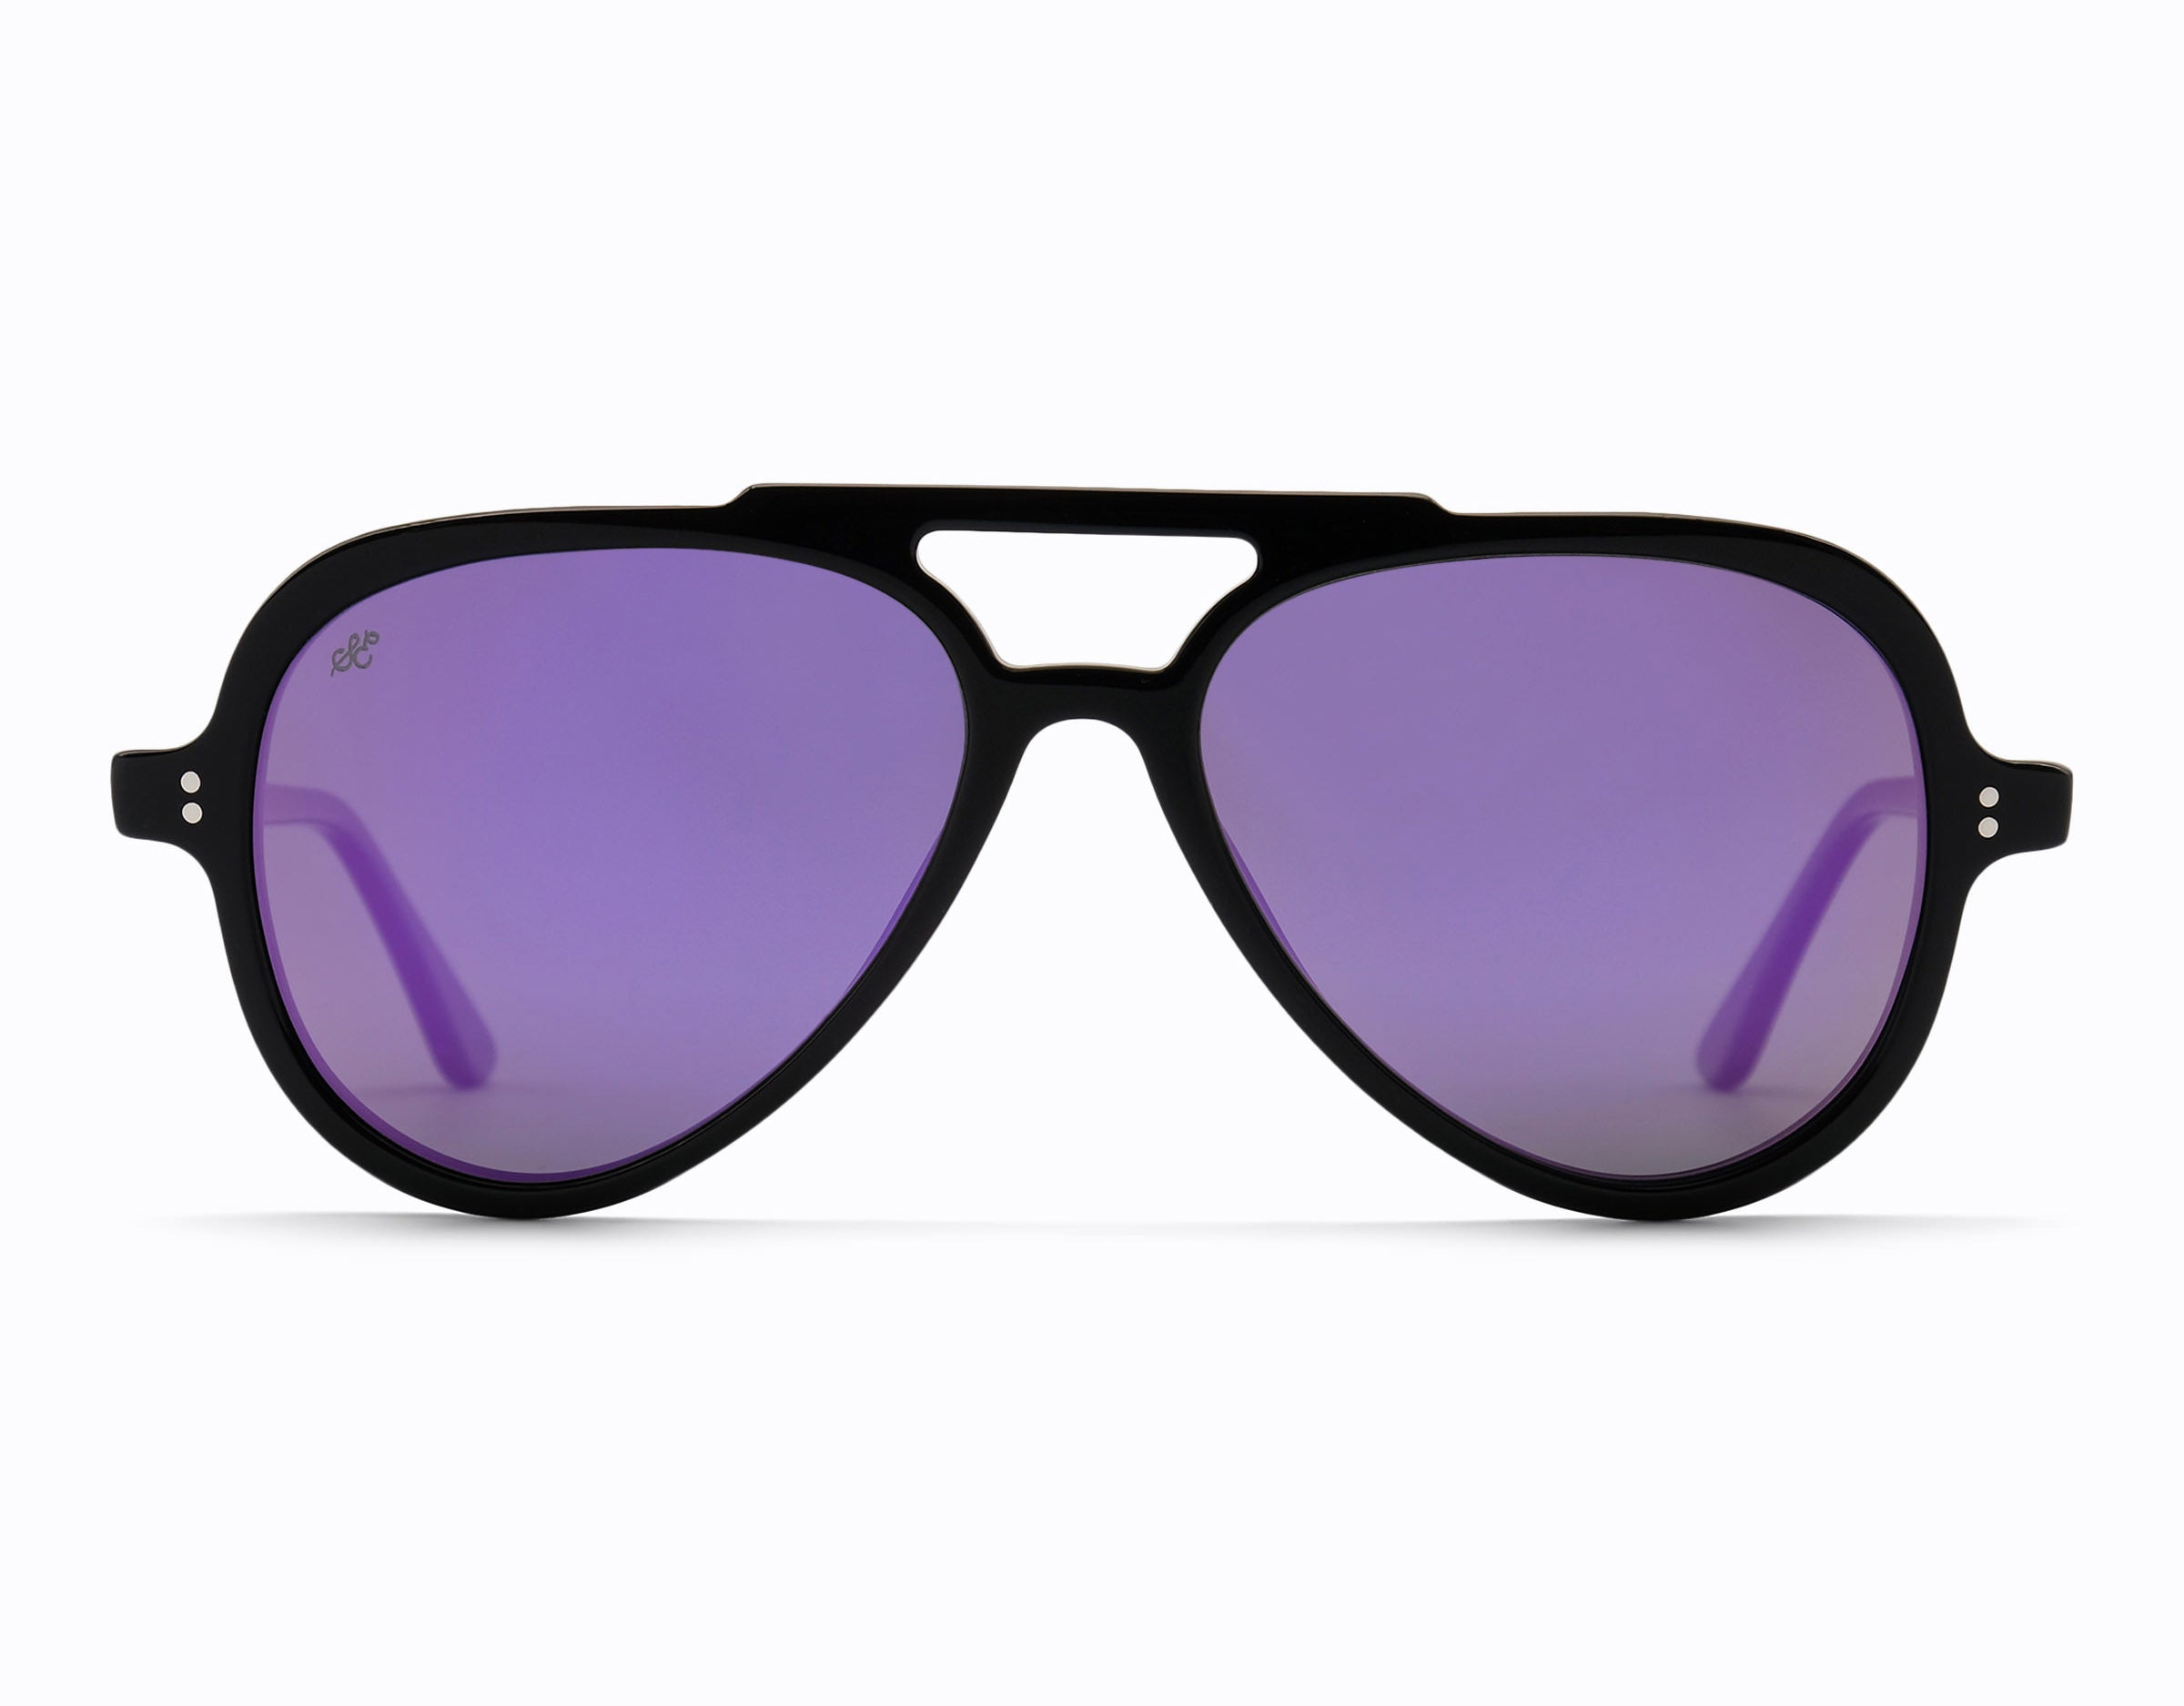 Polarized Islanders 2 Sunglasses With Purple Frame & Gray Lens - Walmart.com